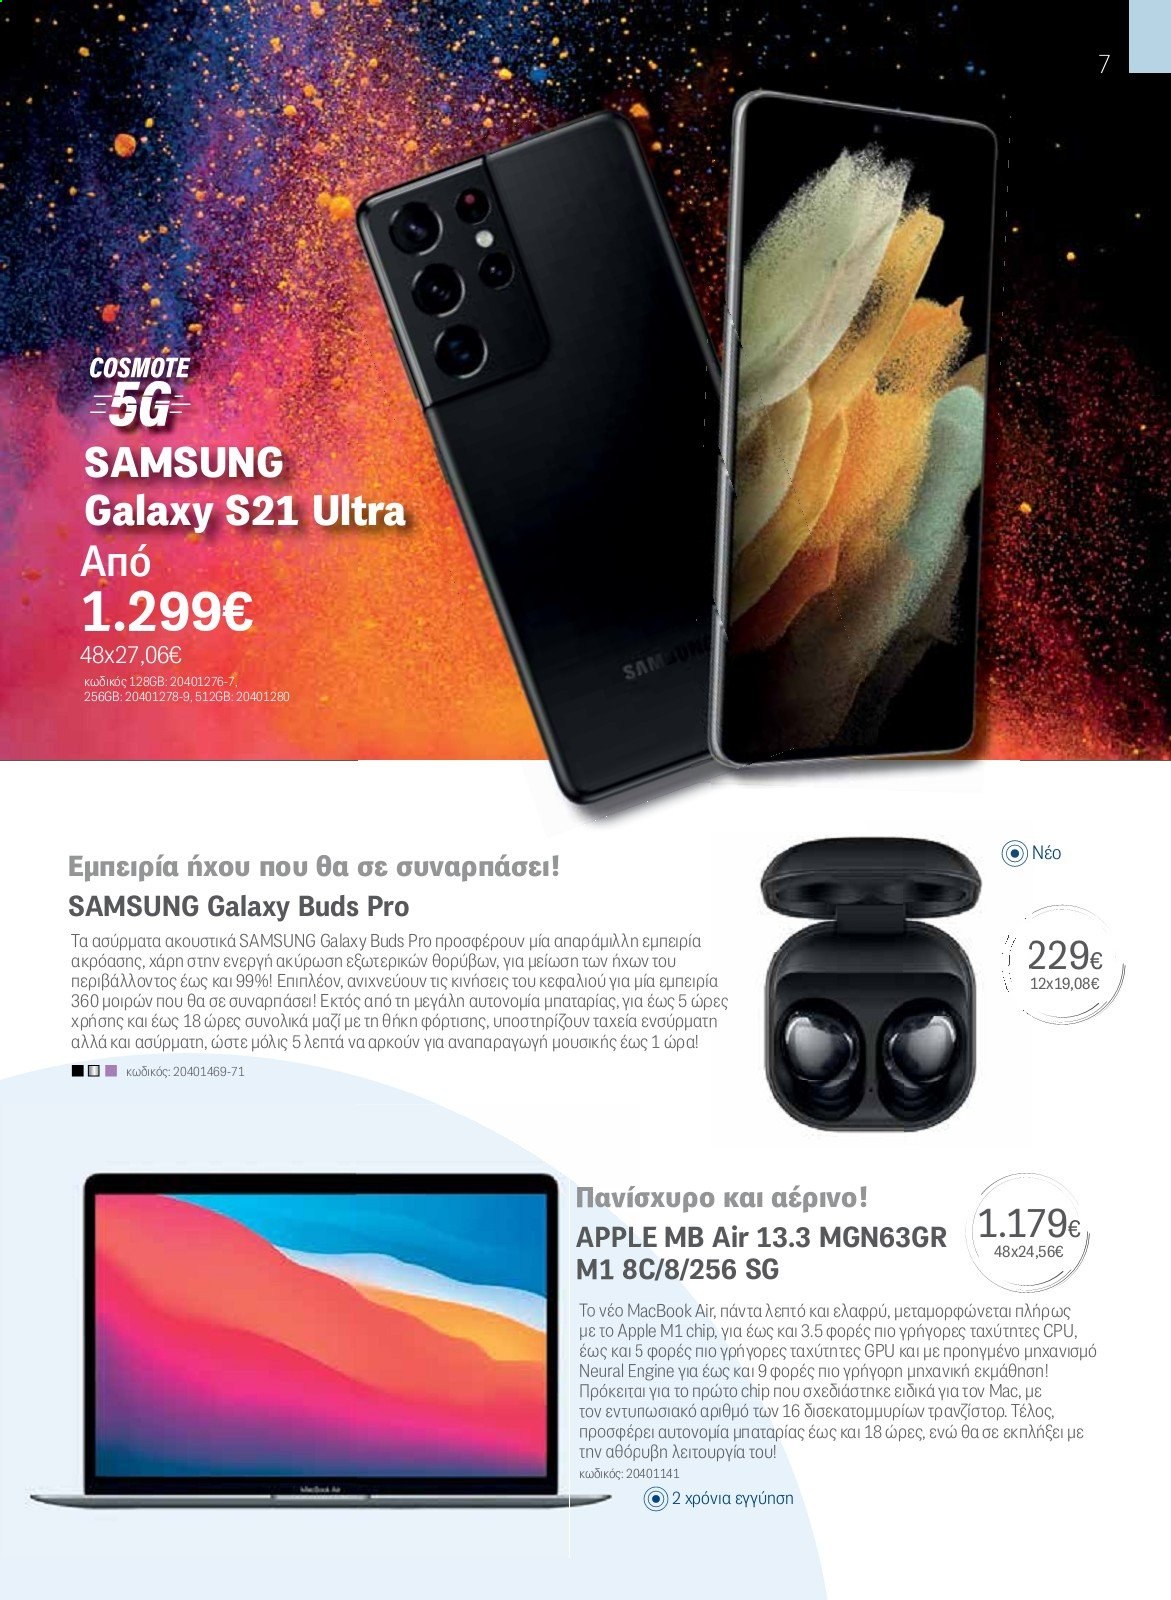 thumbnail - Φυλλάδια Germanos - Εκπτωτικά προϊόντα - Samsung, Apple, Samsung Galaxy S21, ακουστικά. Σελίδα 7.